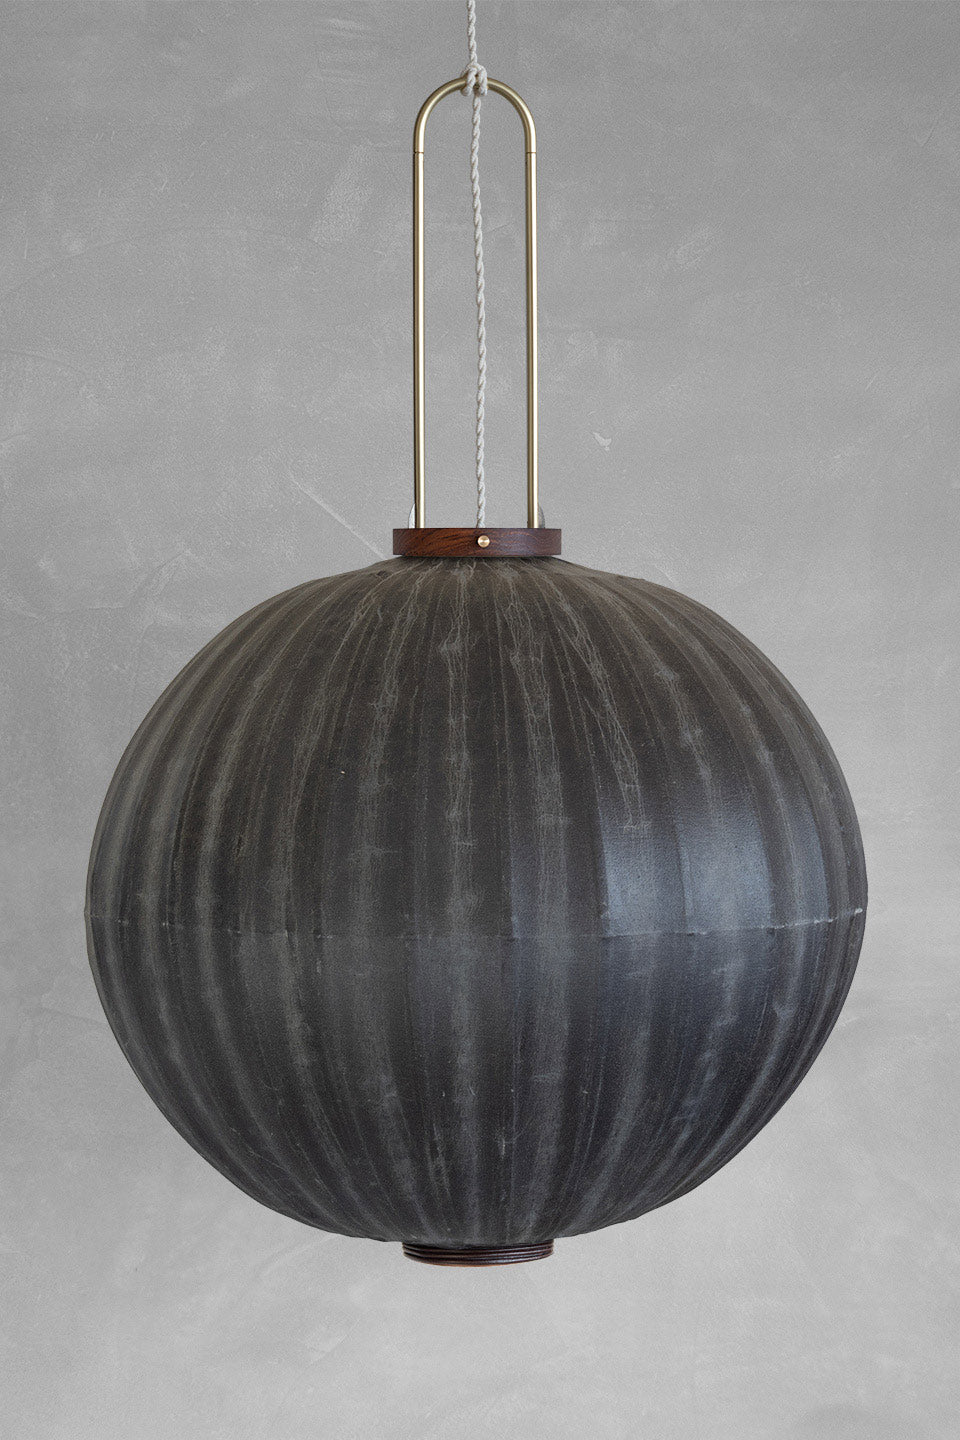 The round Mandarin-shaped version of the Heritage Lantern Black XL by Taiwan Lantern.